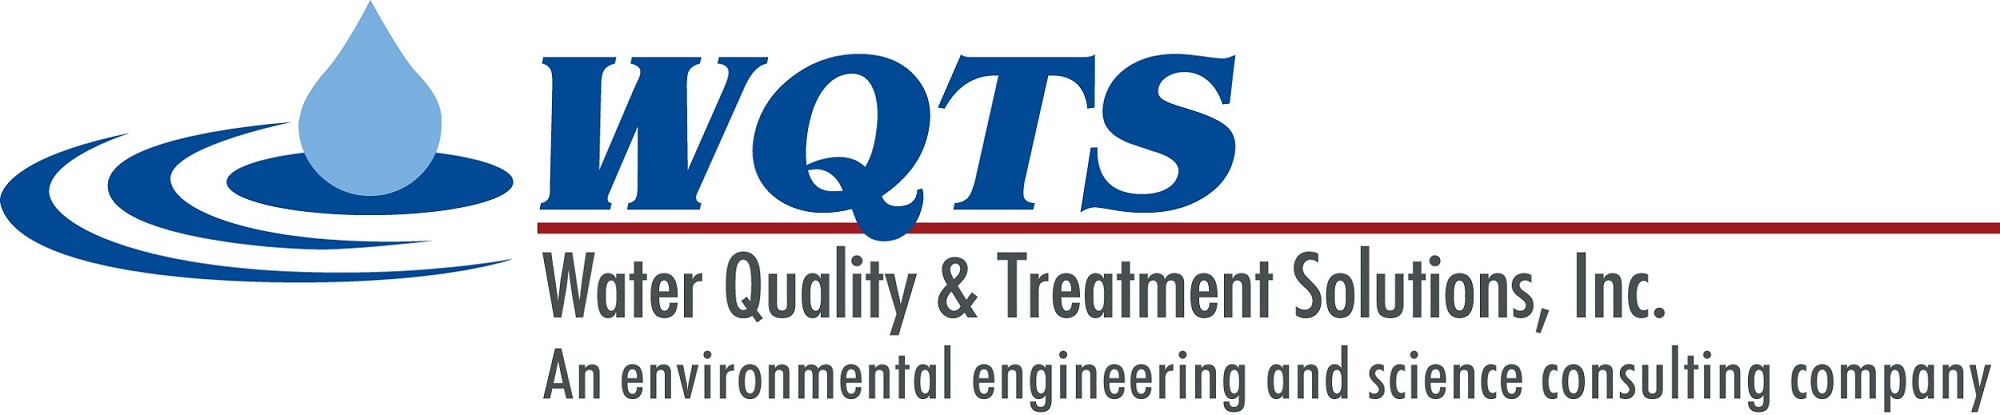 WQTS Banner 1 